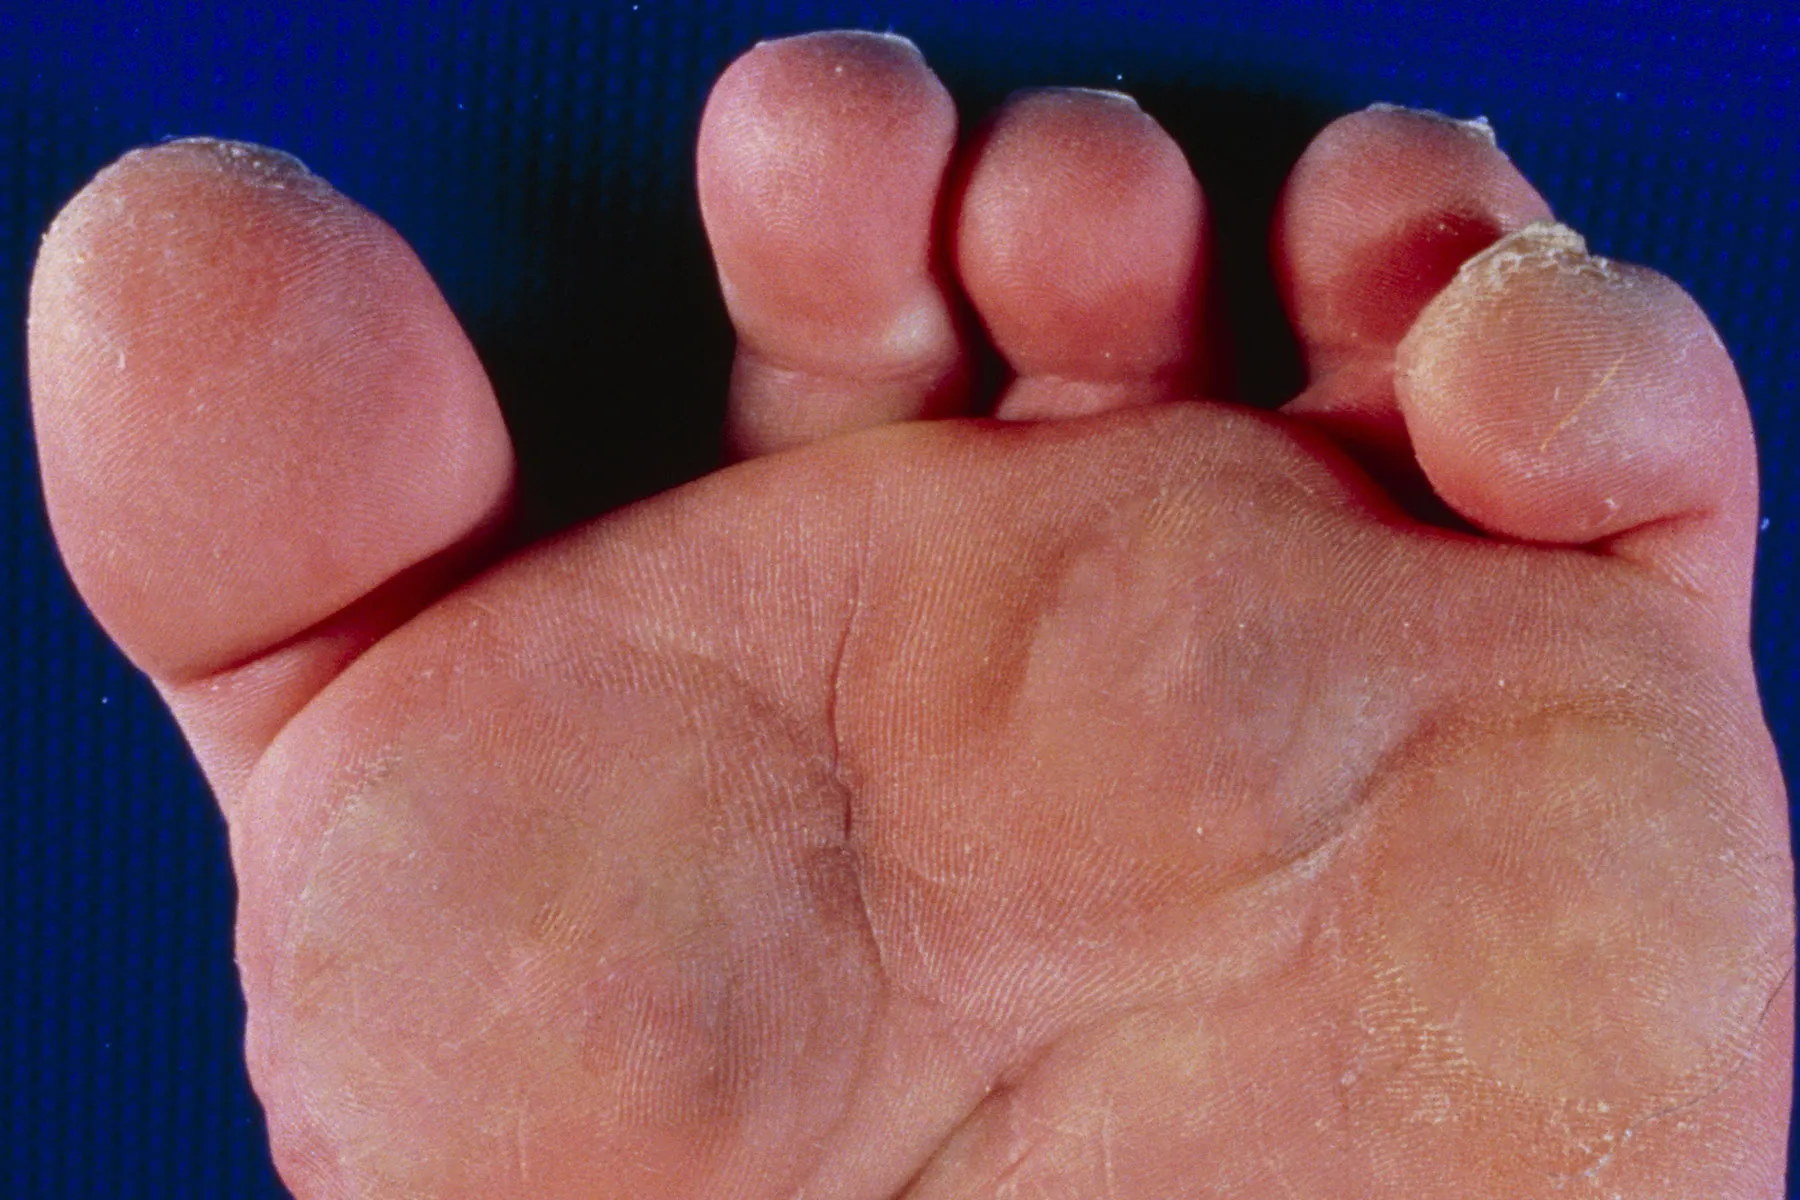 cracked skin under little toe